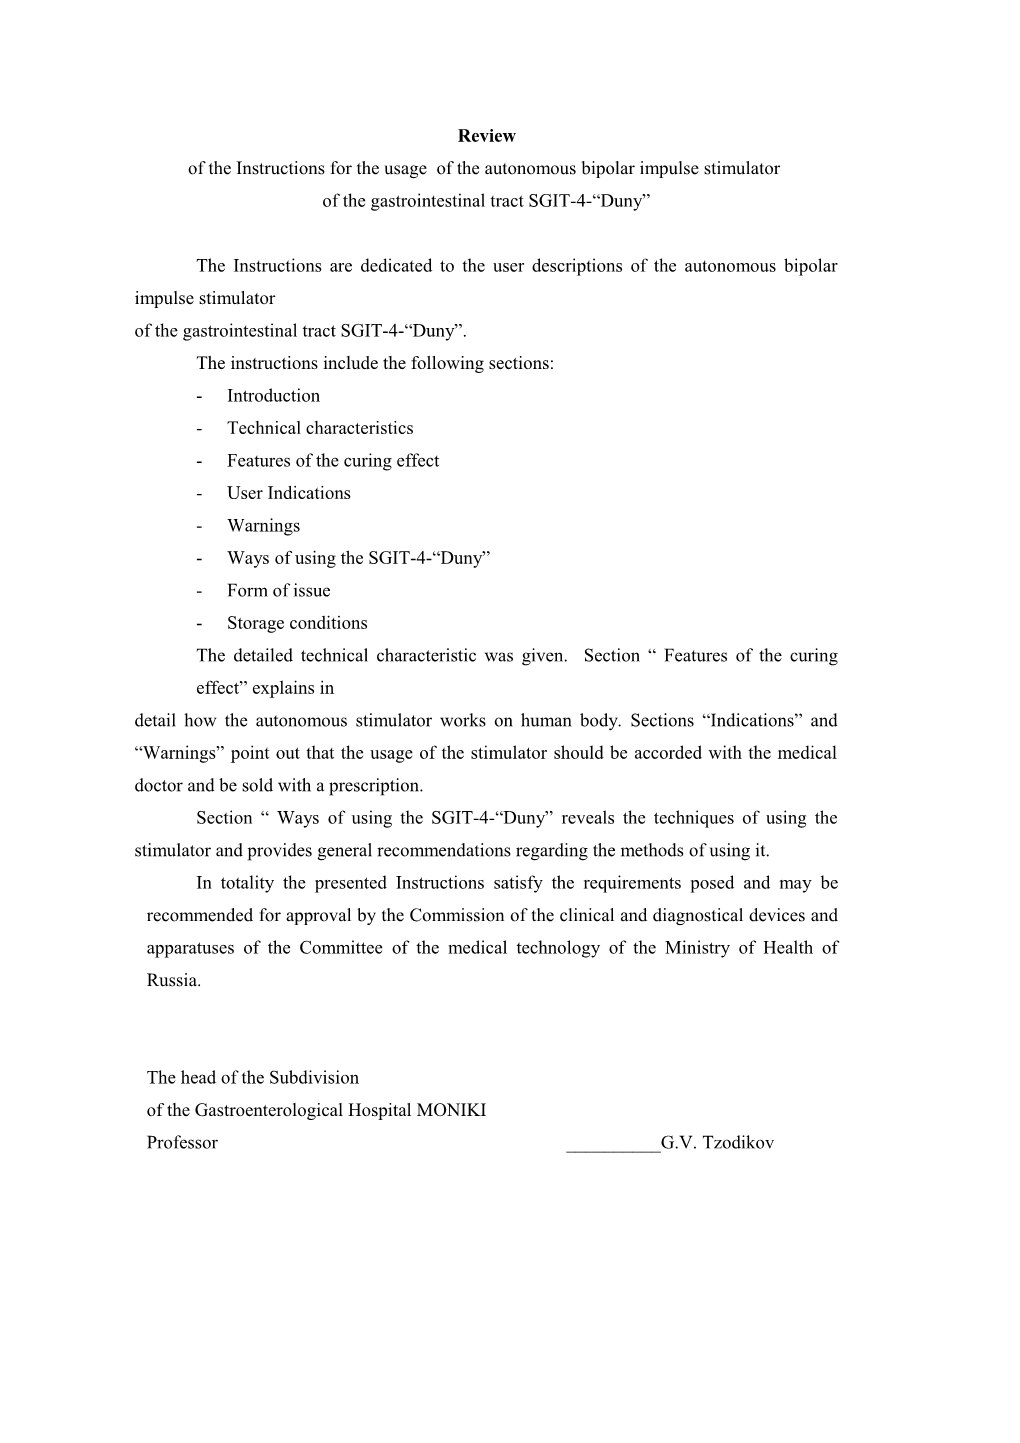 Of the Instructions for the Usage of the Autonomous Bipolar Impulse Stimulator